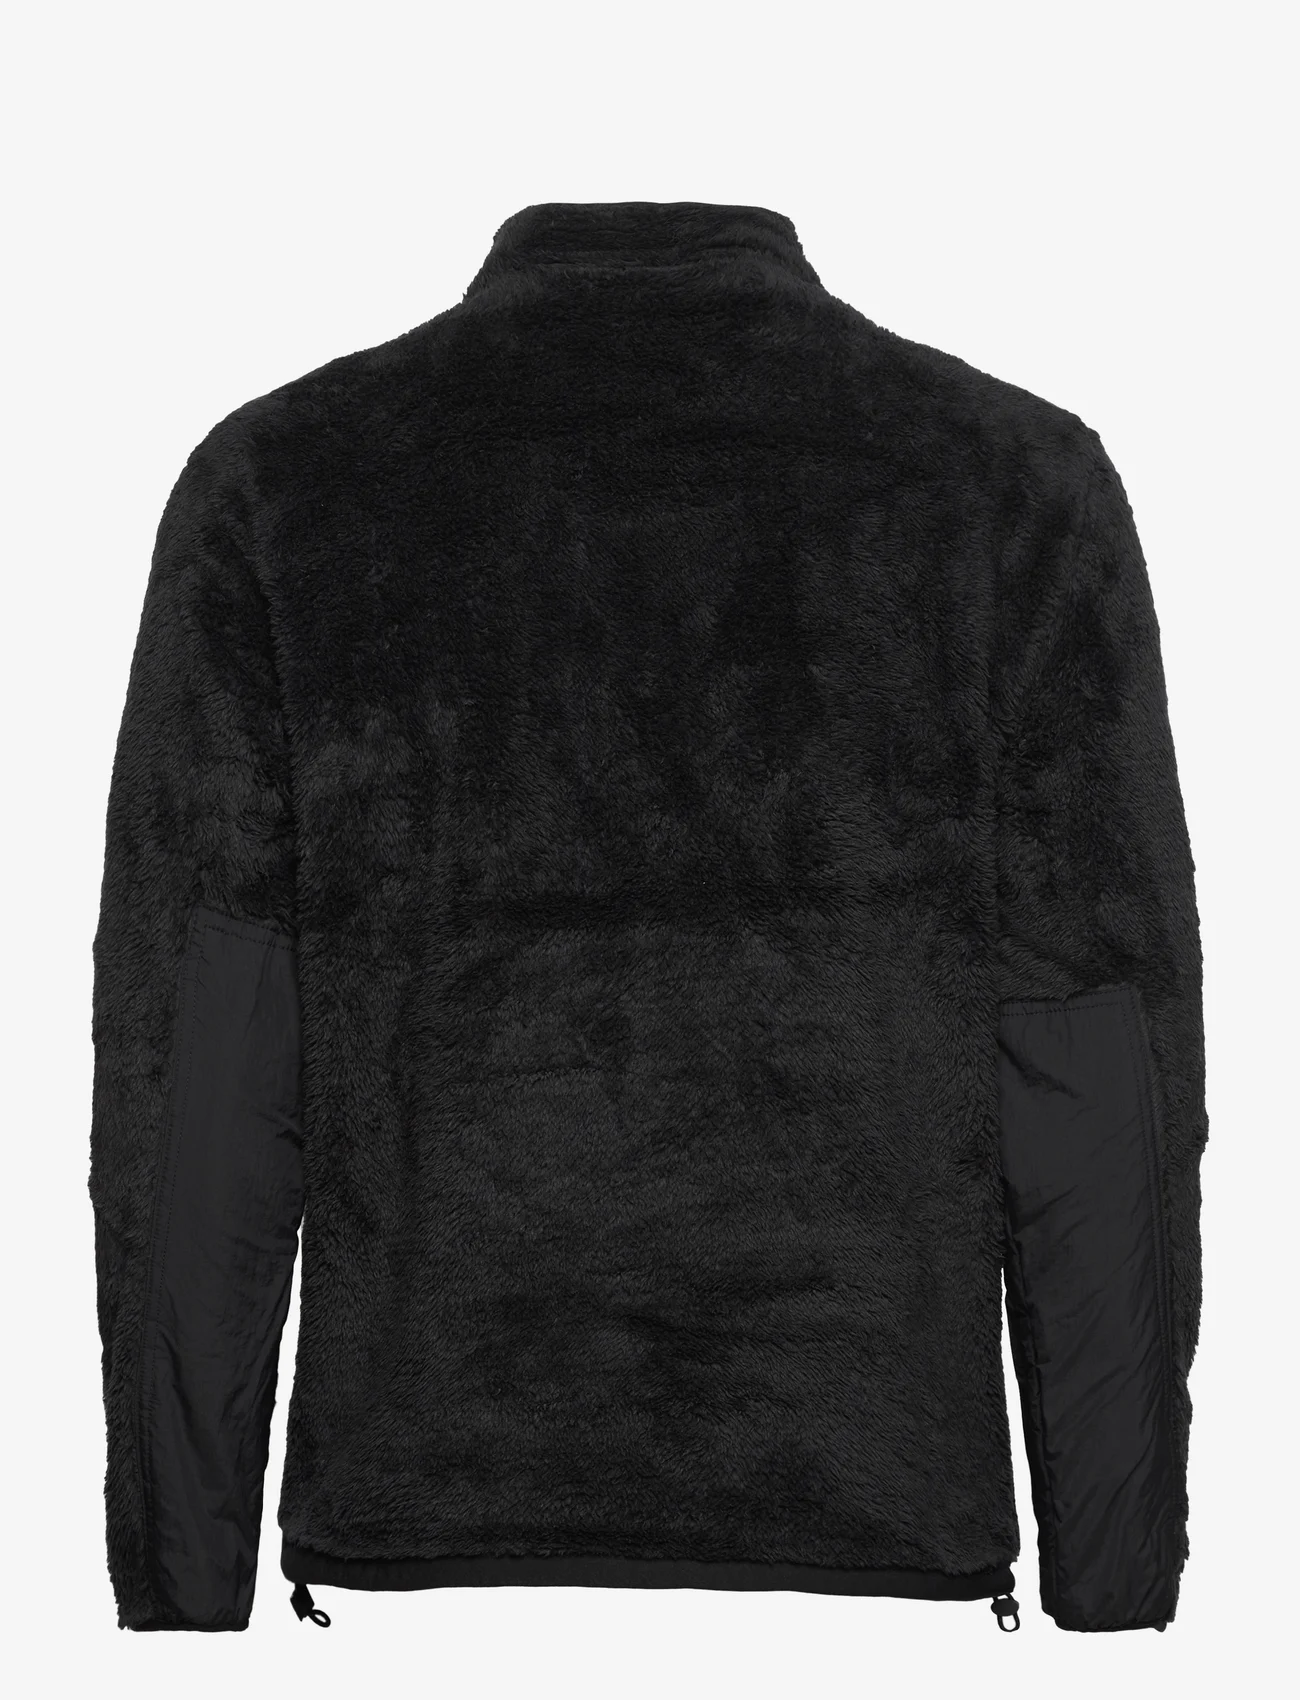 Timberland - High Loft Fleece Jaket - mid layer jackets - black - 1